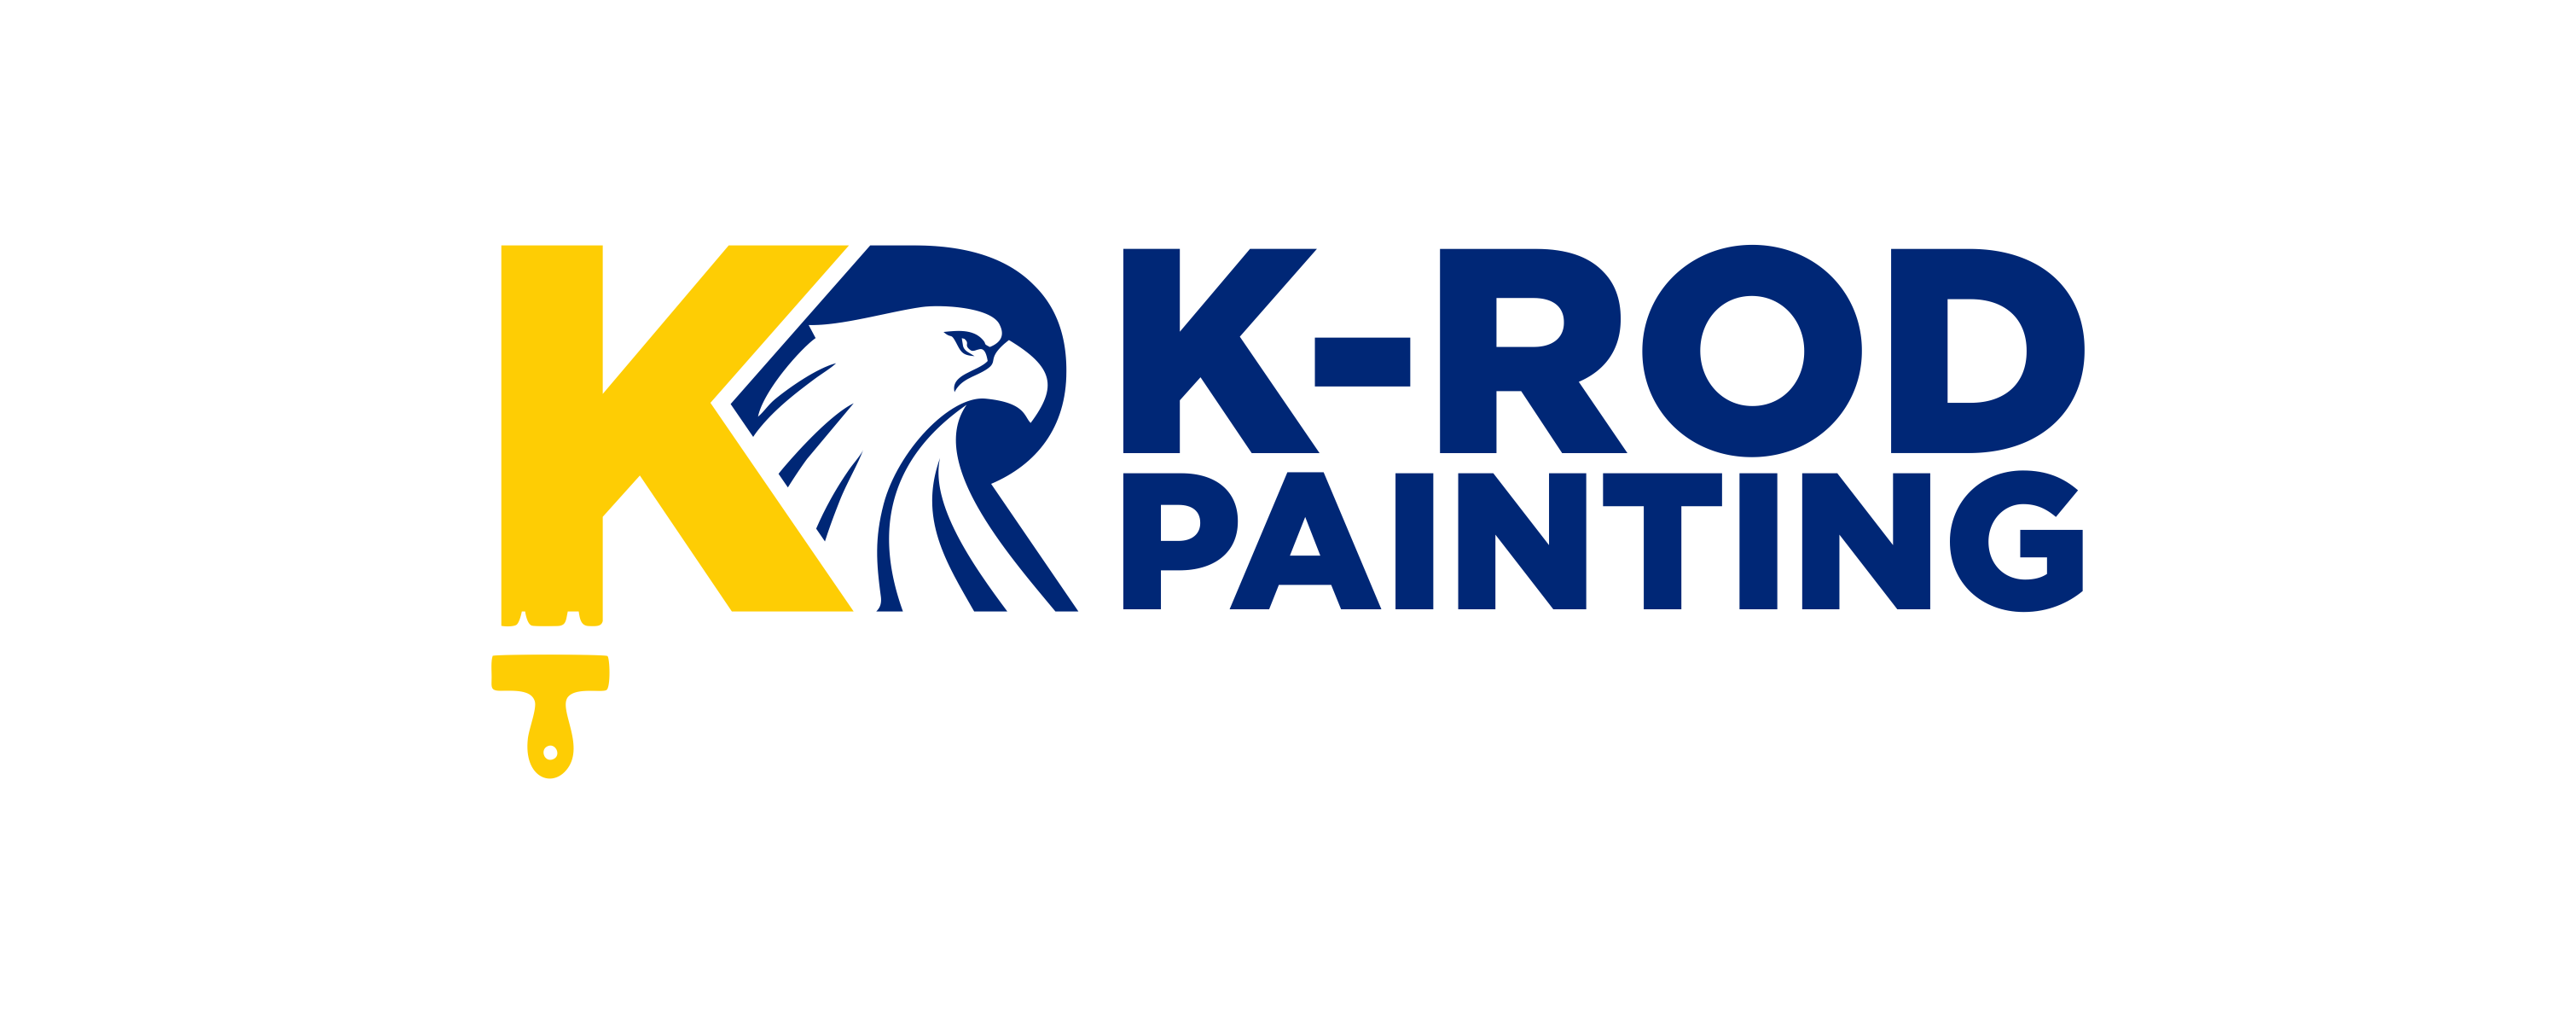 K-Rod Painting Logo